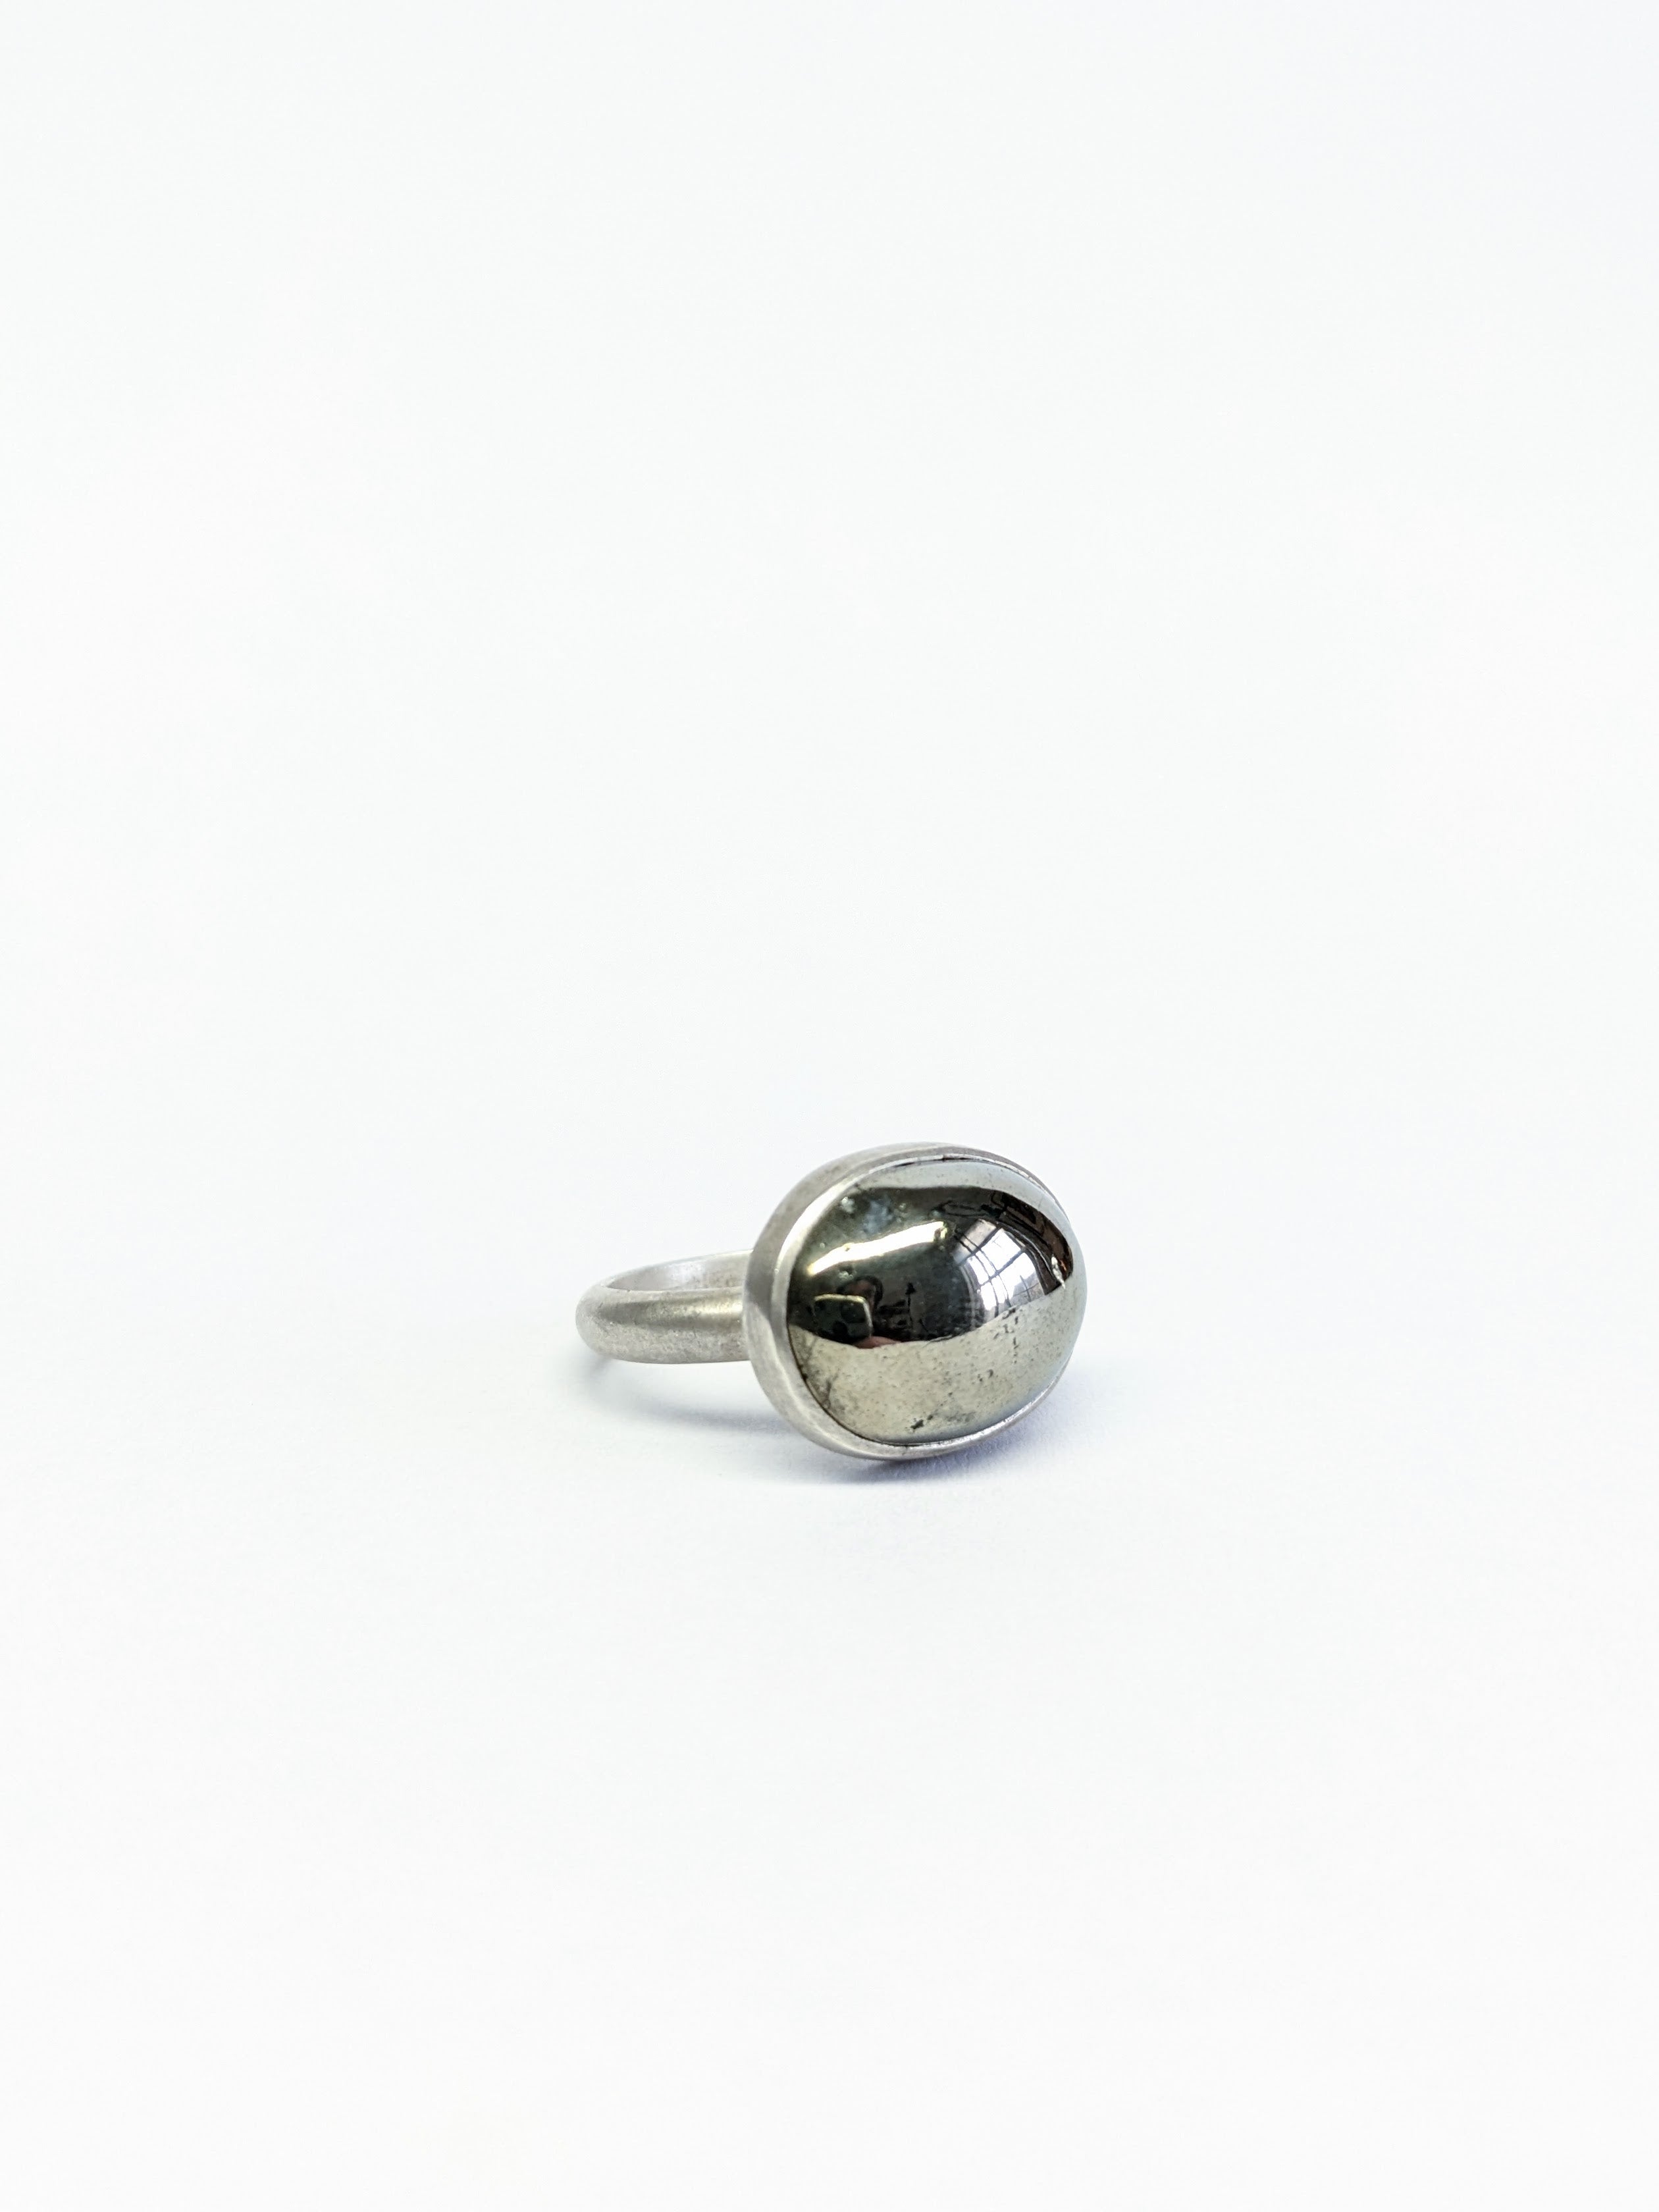 Handcut Pyrite Ring - Size 6.75